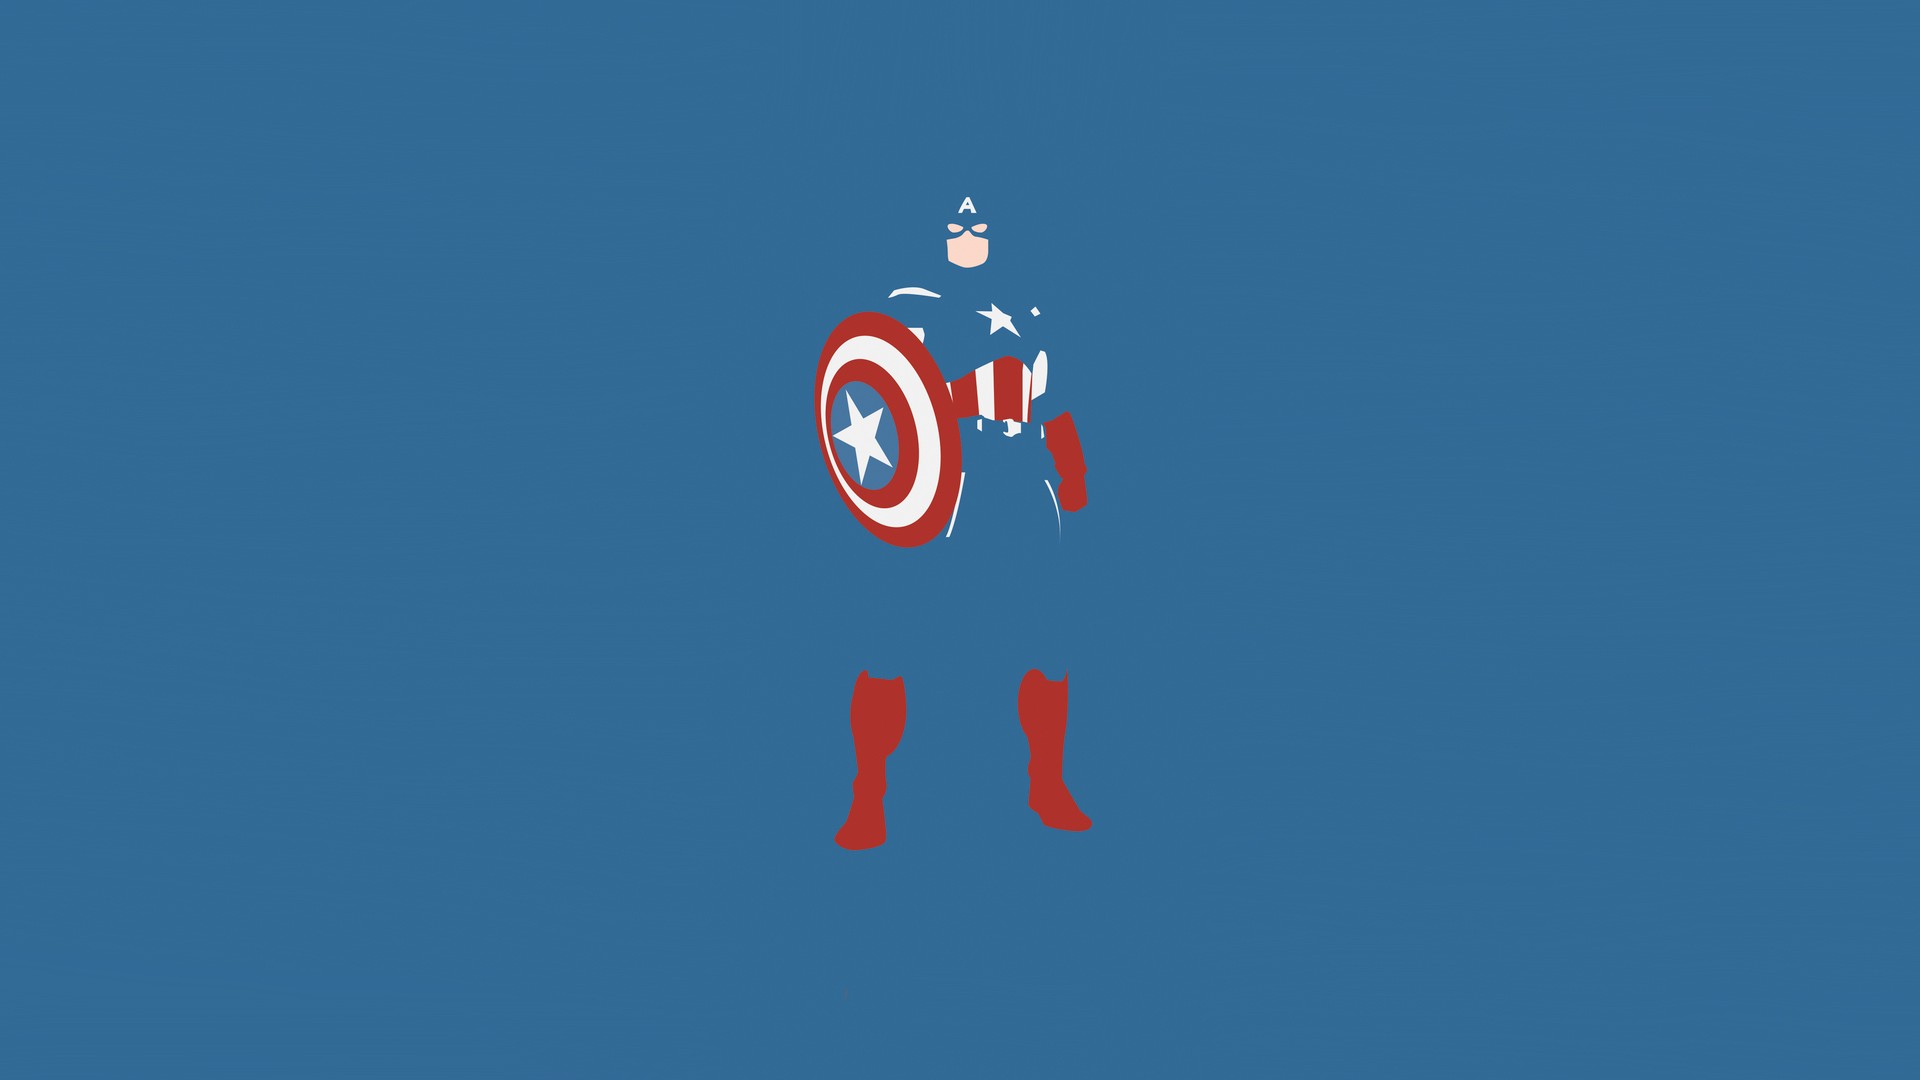 Minimalistic Ics Captain America Blue Background Wallpaper